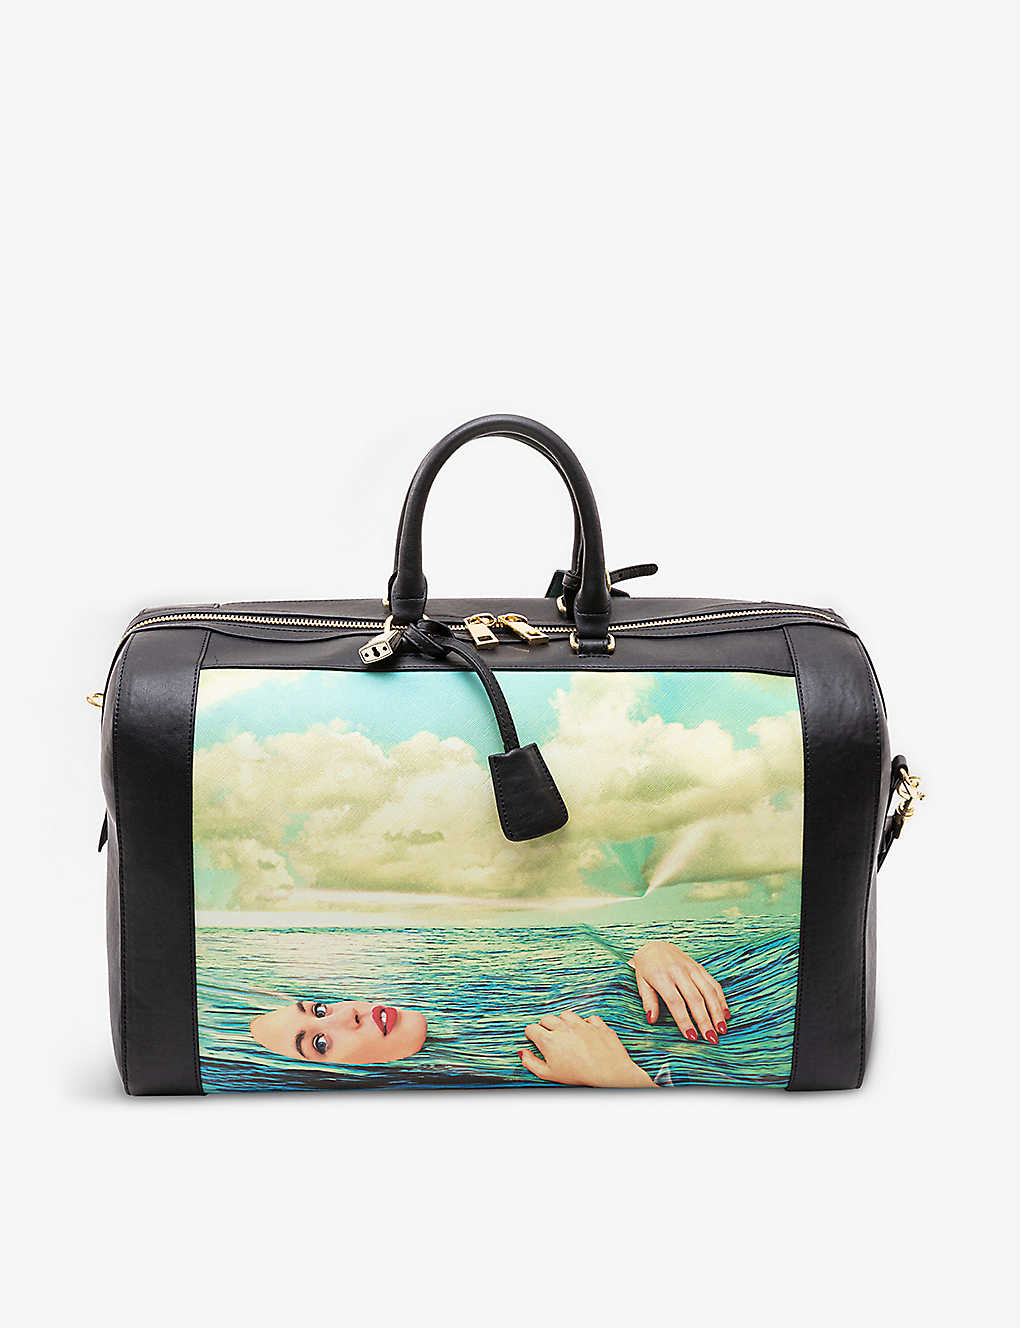 Seletti Wears Toiletpaper Seagirl Faux-leather Travel Bag